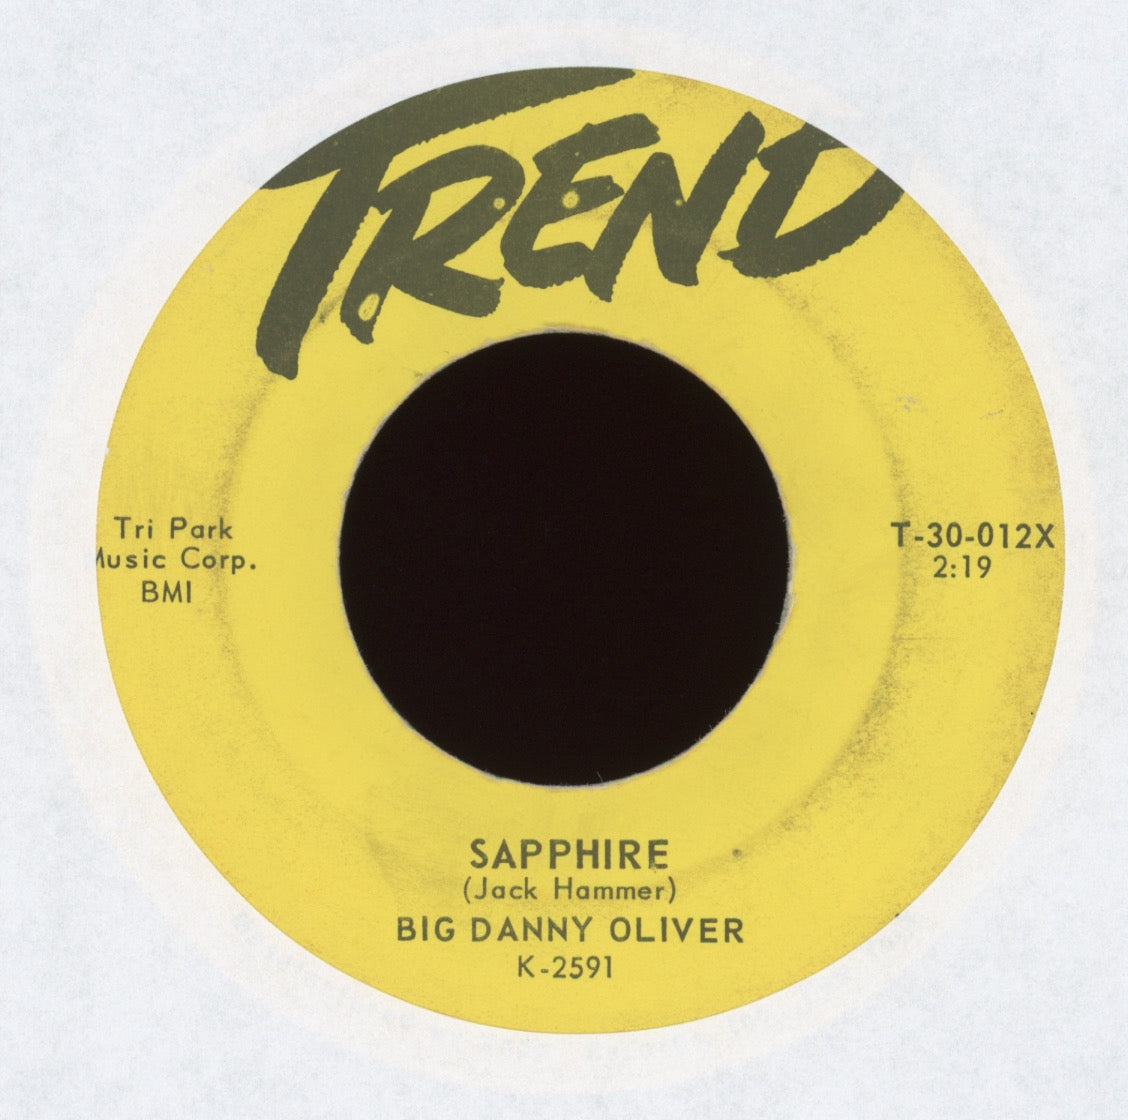 Big Danny Oliver - Sapphire on Trend